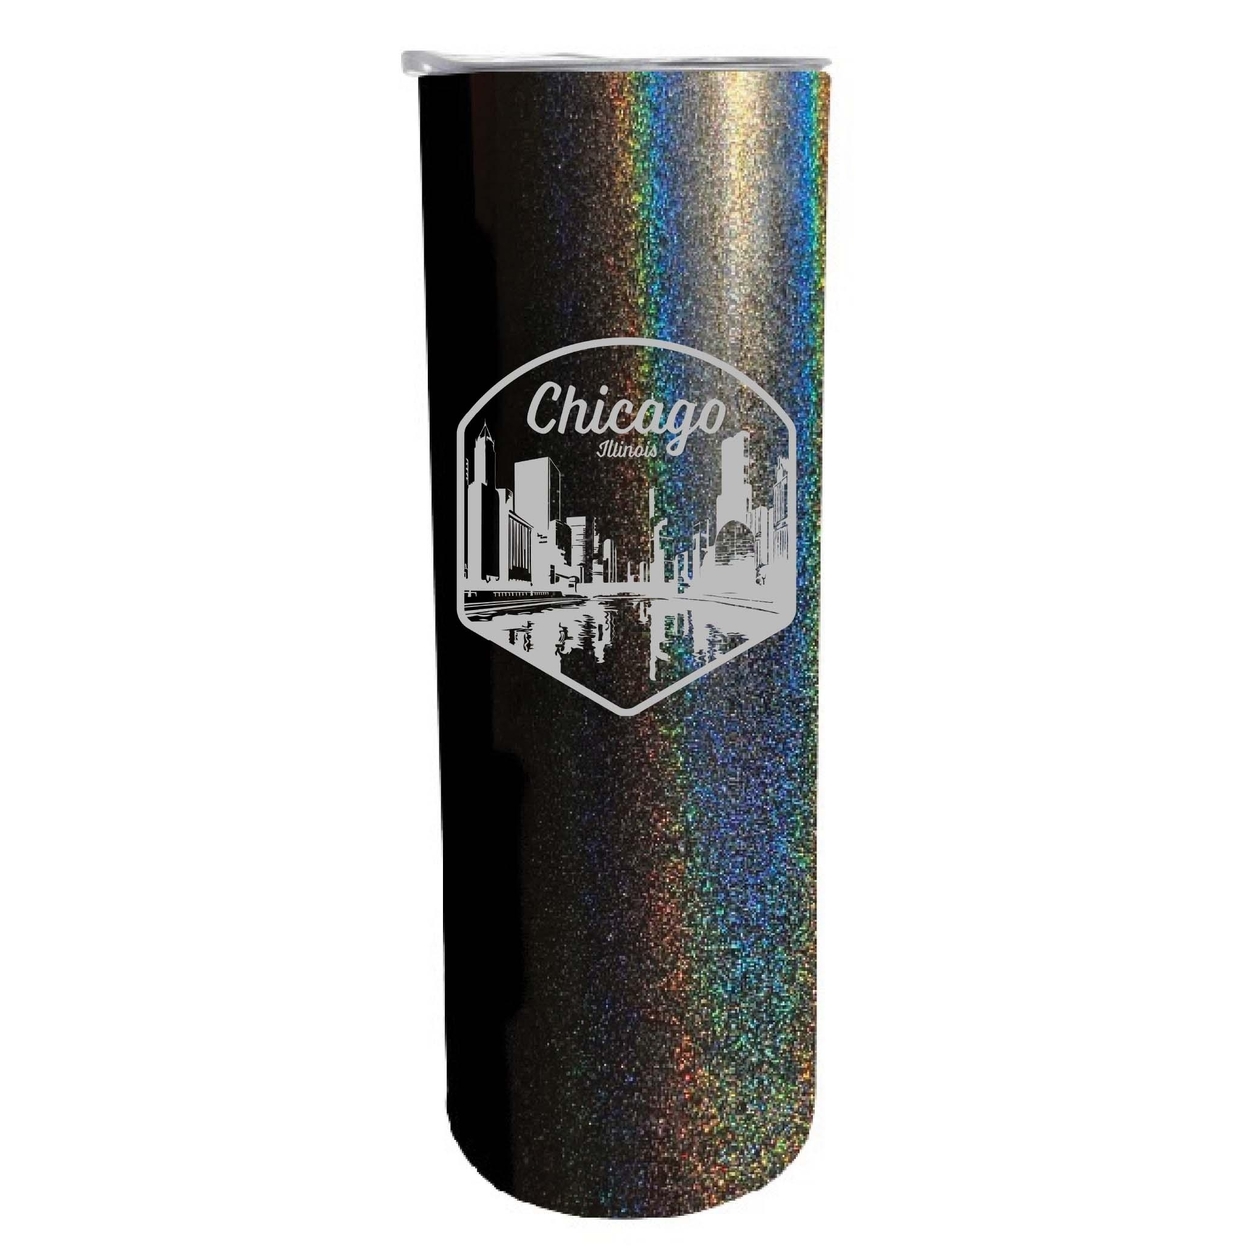 Chicago Illinois Souvenir 20 Oz Engraved Insulated Skinny Tumbler - Black Glitter,,4-Pack